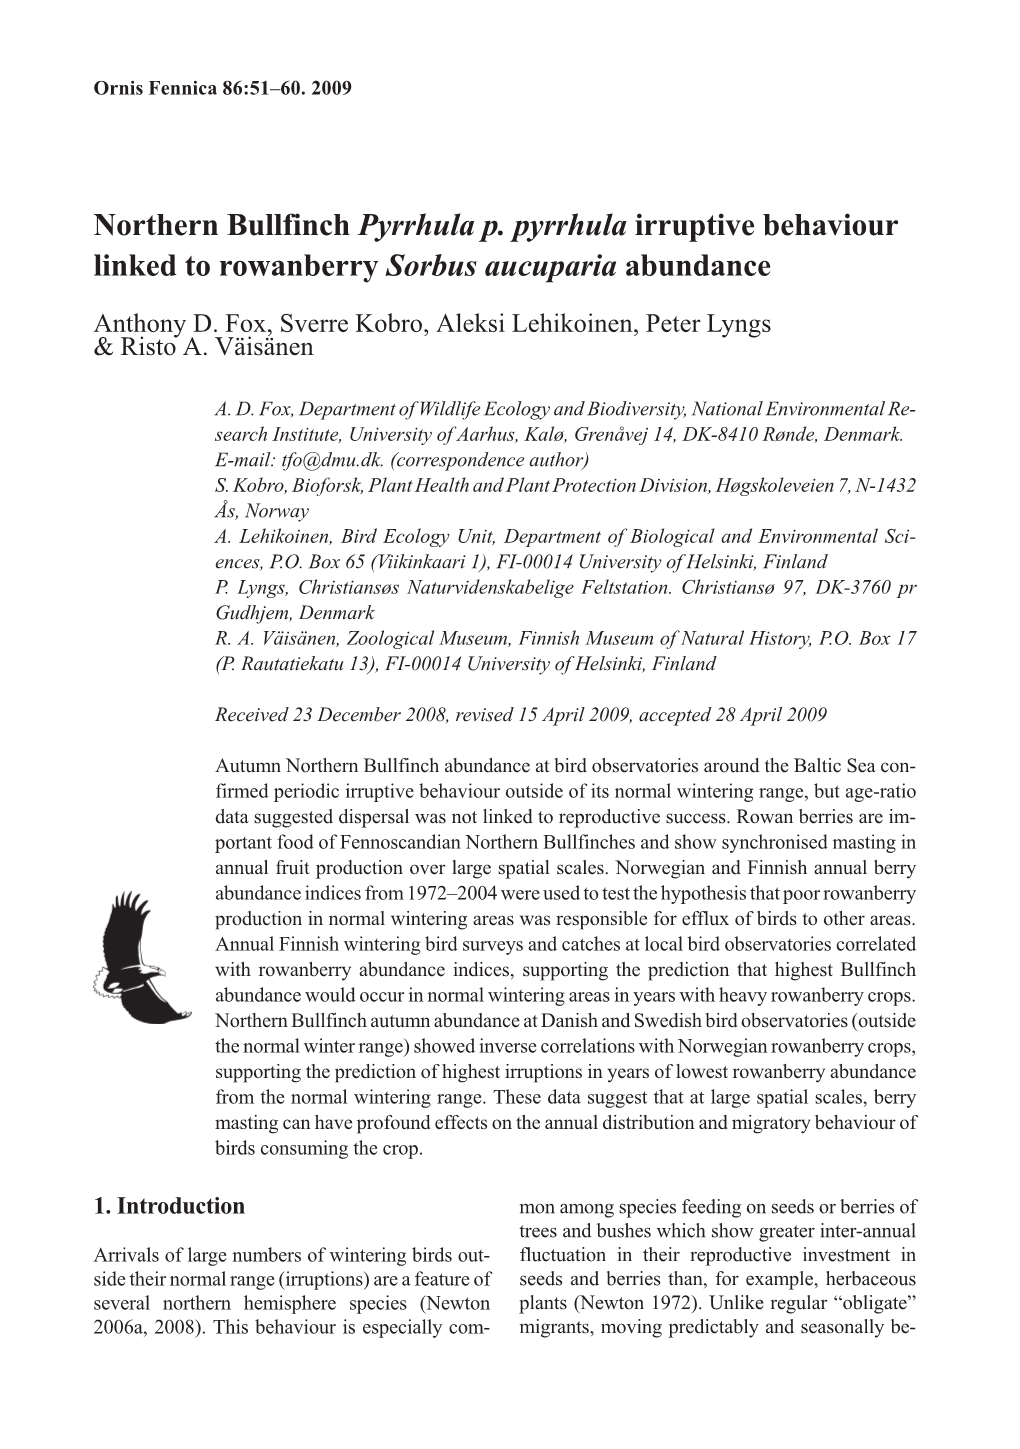 Northern Bullfinch Pyrrhula P. Pyrrhula Irruptive Behaviour Linked to Rowanberry Sorbus Aucuparia Abundance